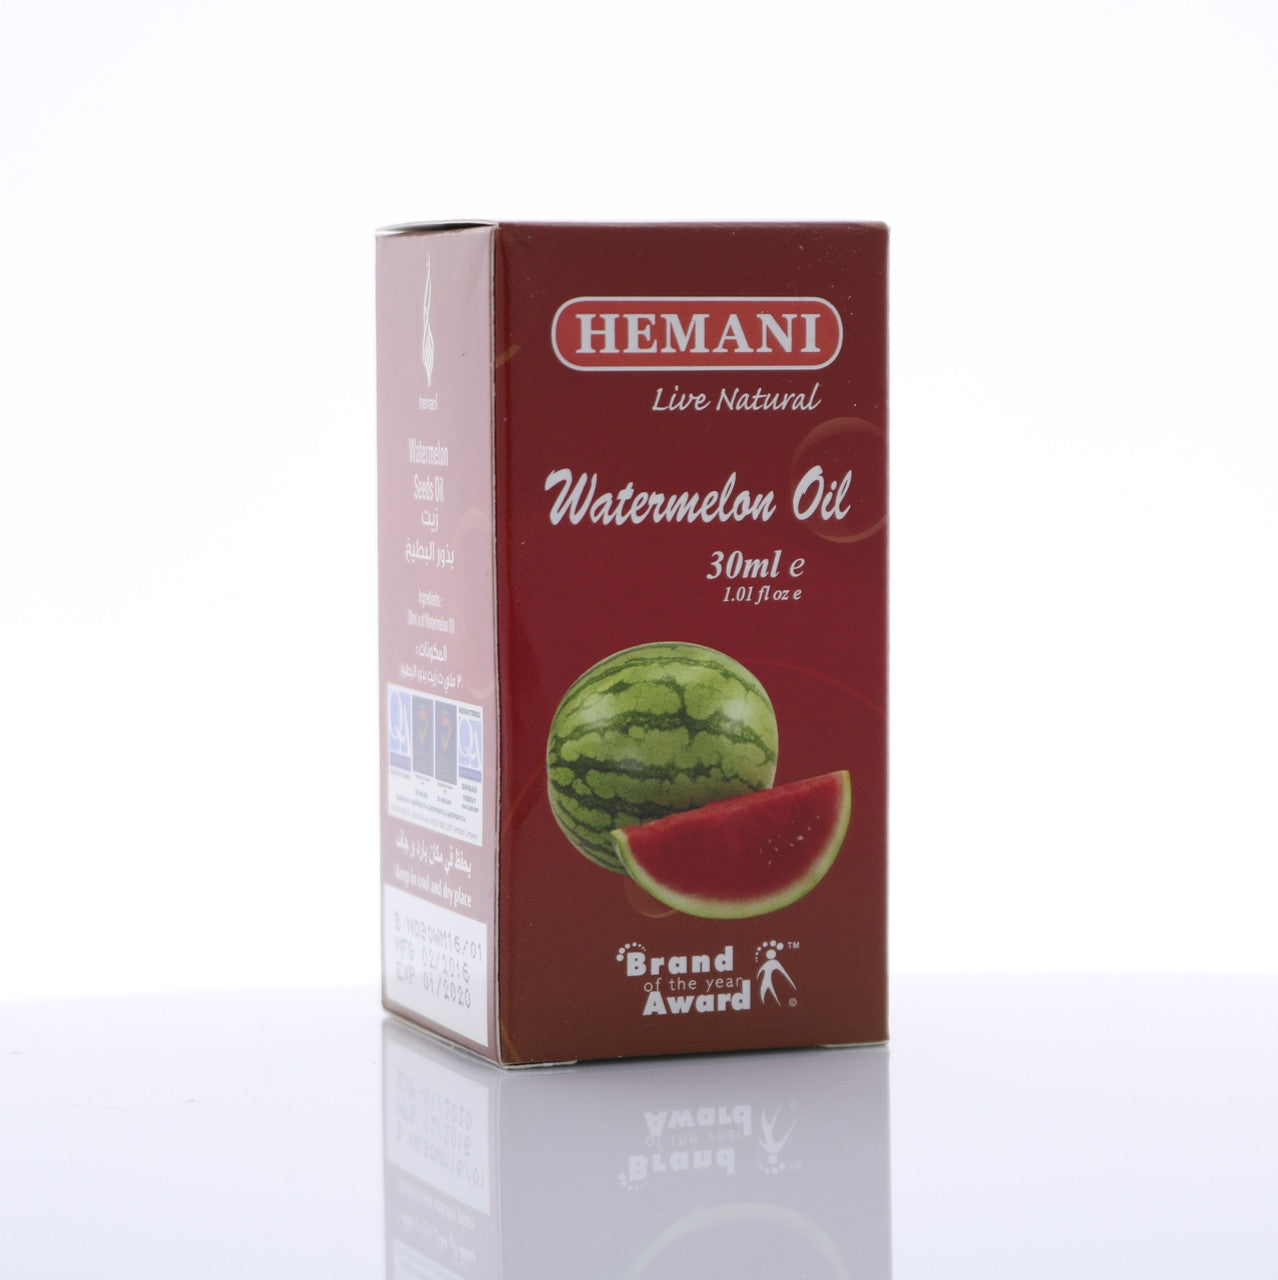 Hemani Watermelon Oil, 30 ml